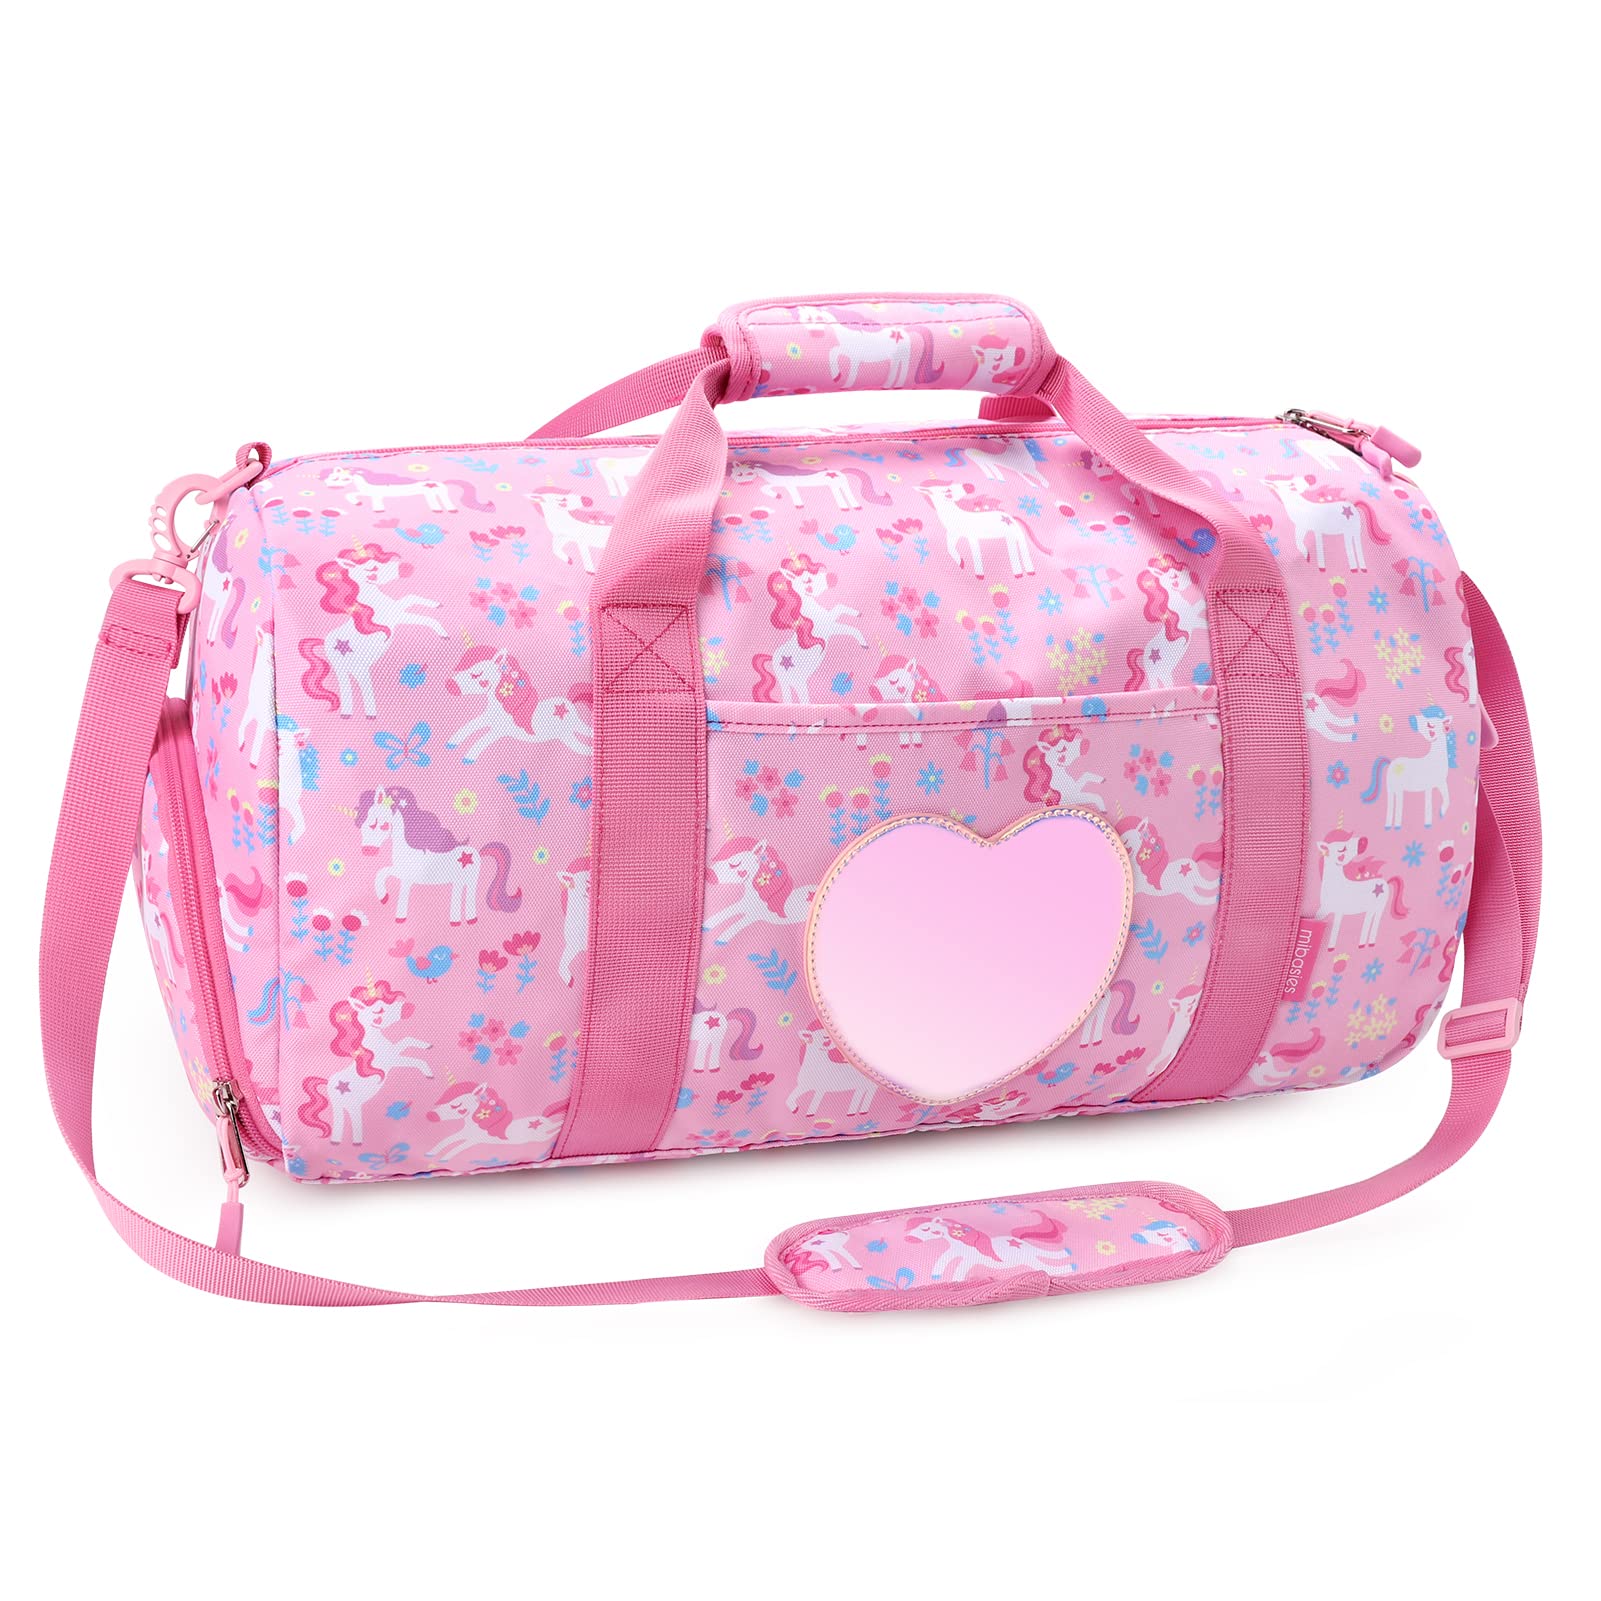 Dance Bag for Girls Kids Duffle Bag Gymnastics Gym Bag Overnight Travel Bag  S... | eBay